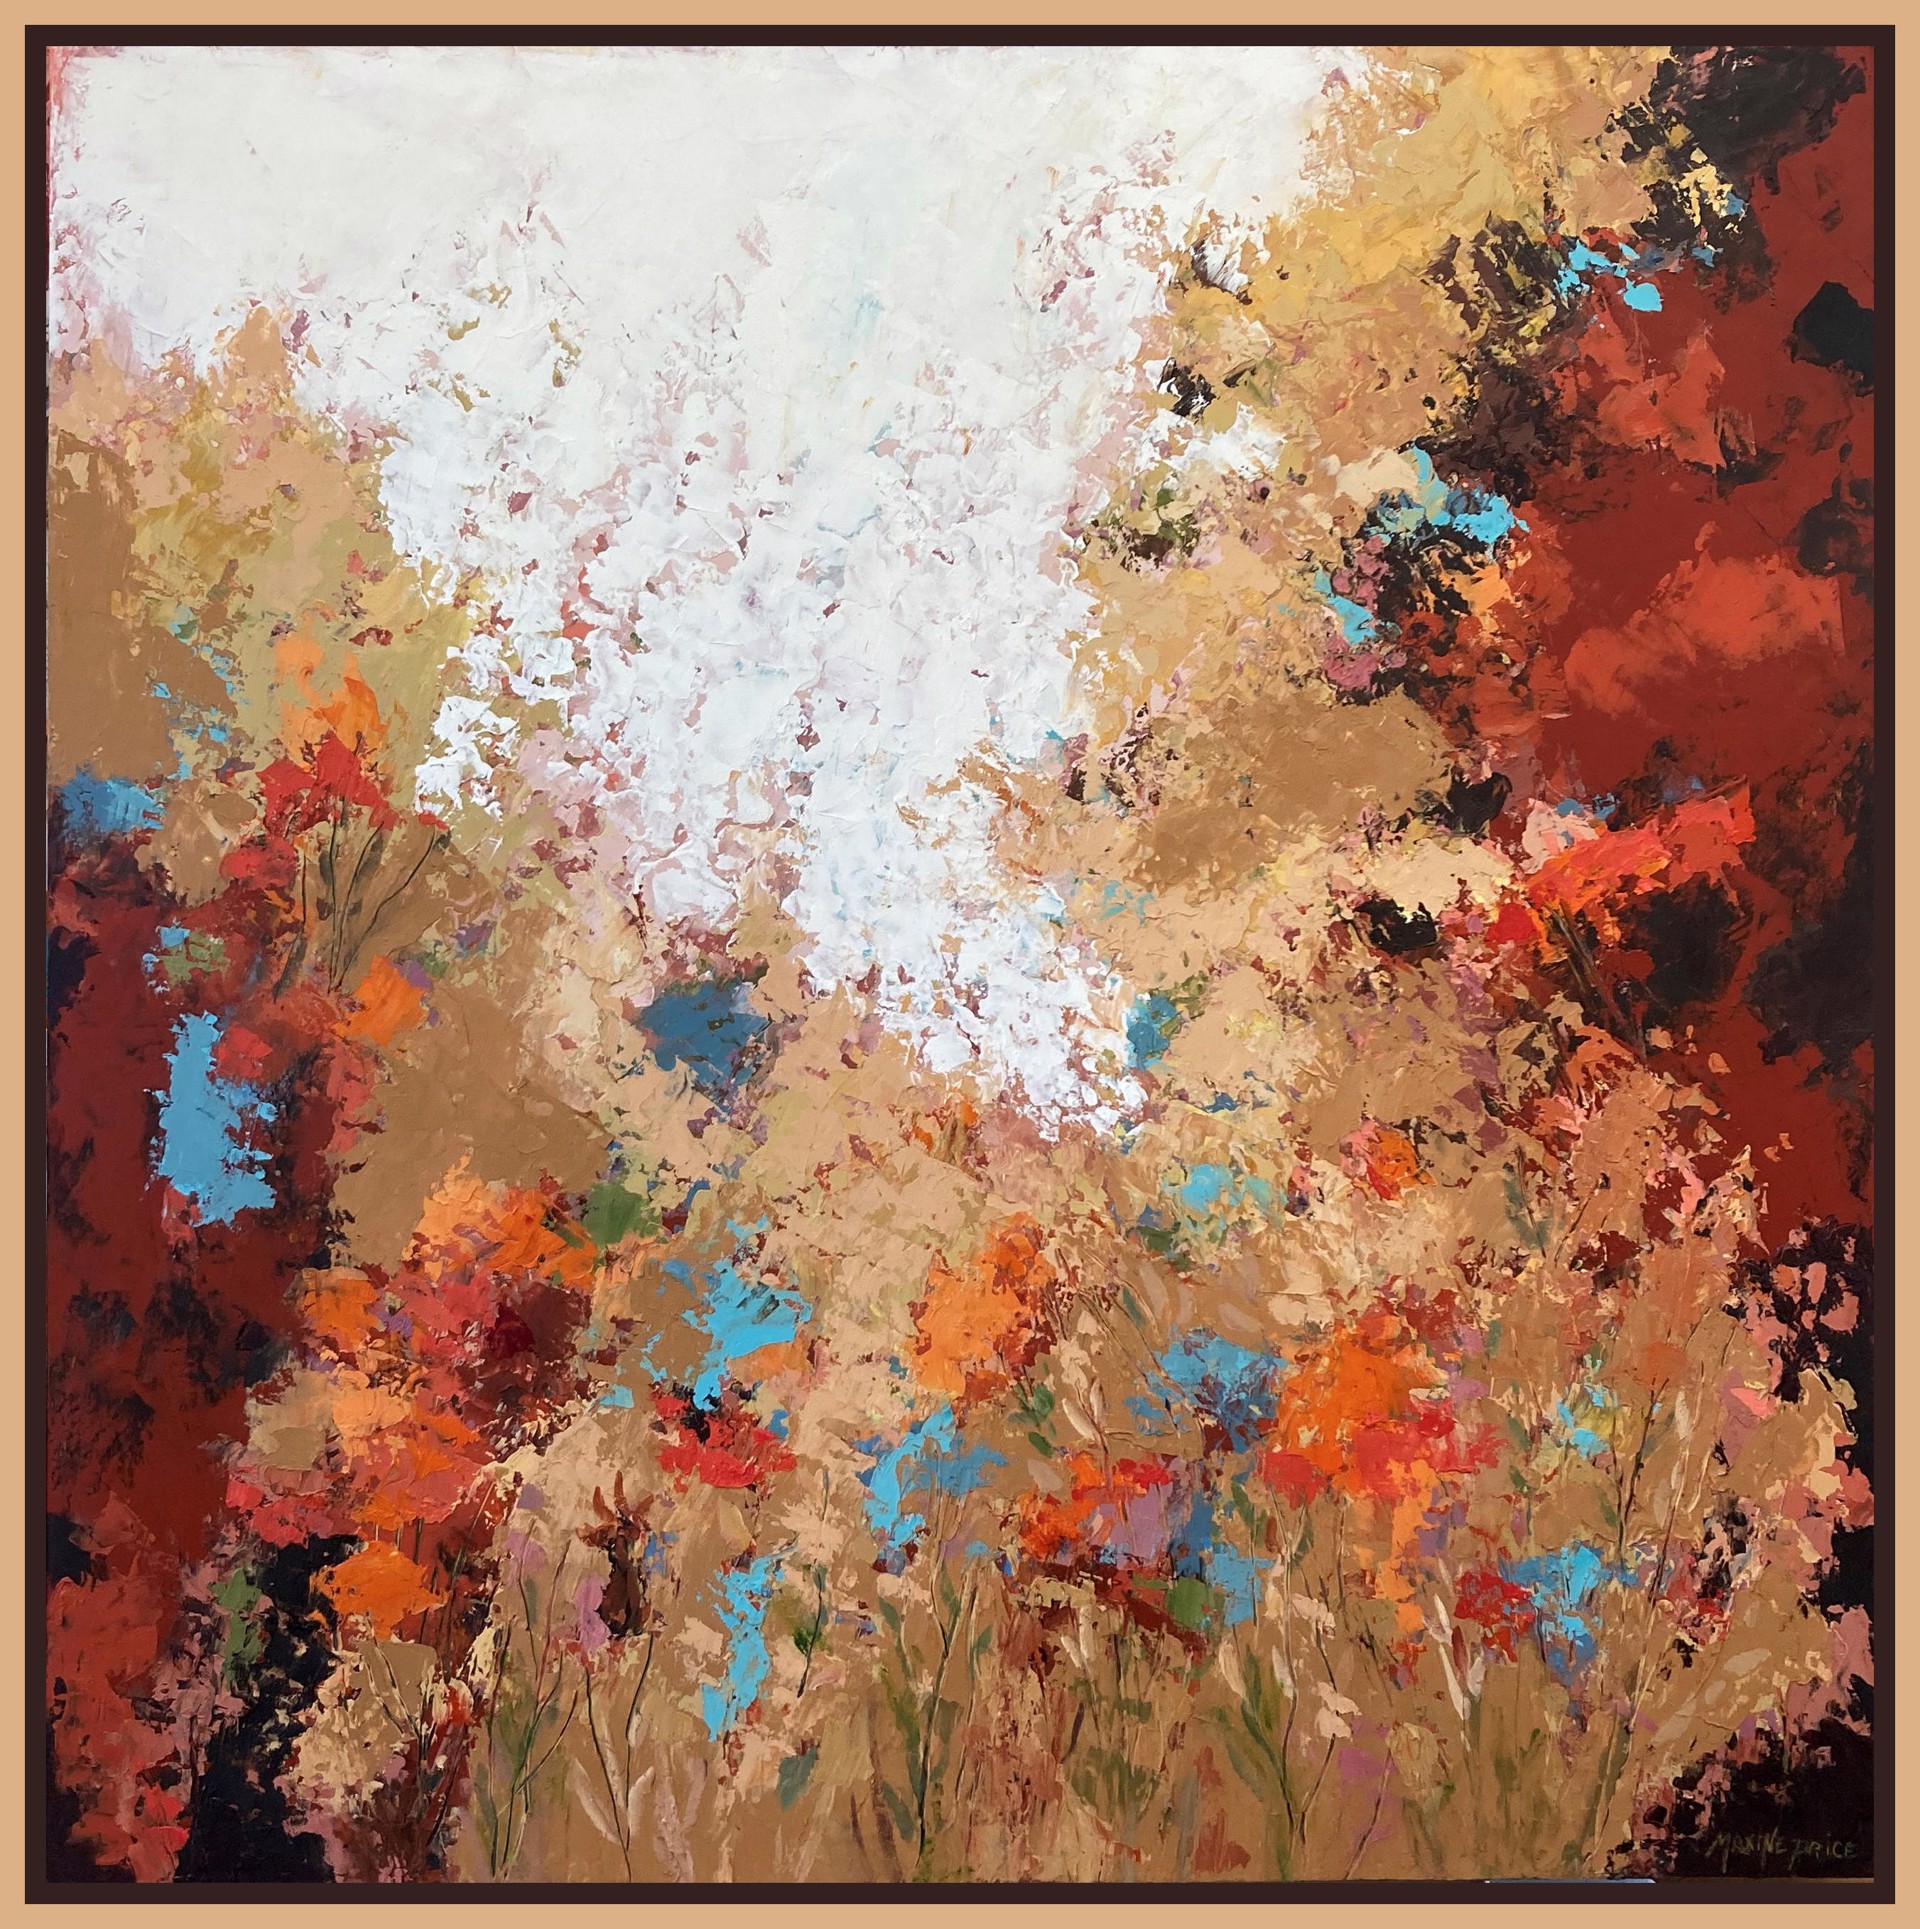 Fall Foliage by Maxine Price